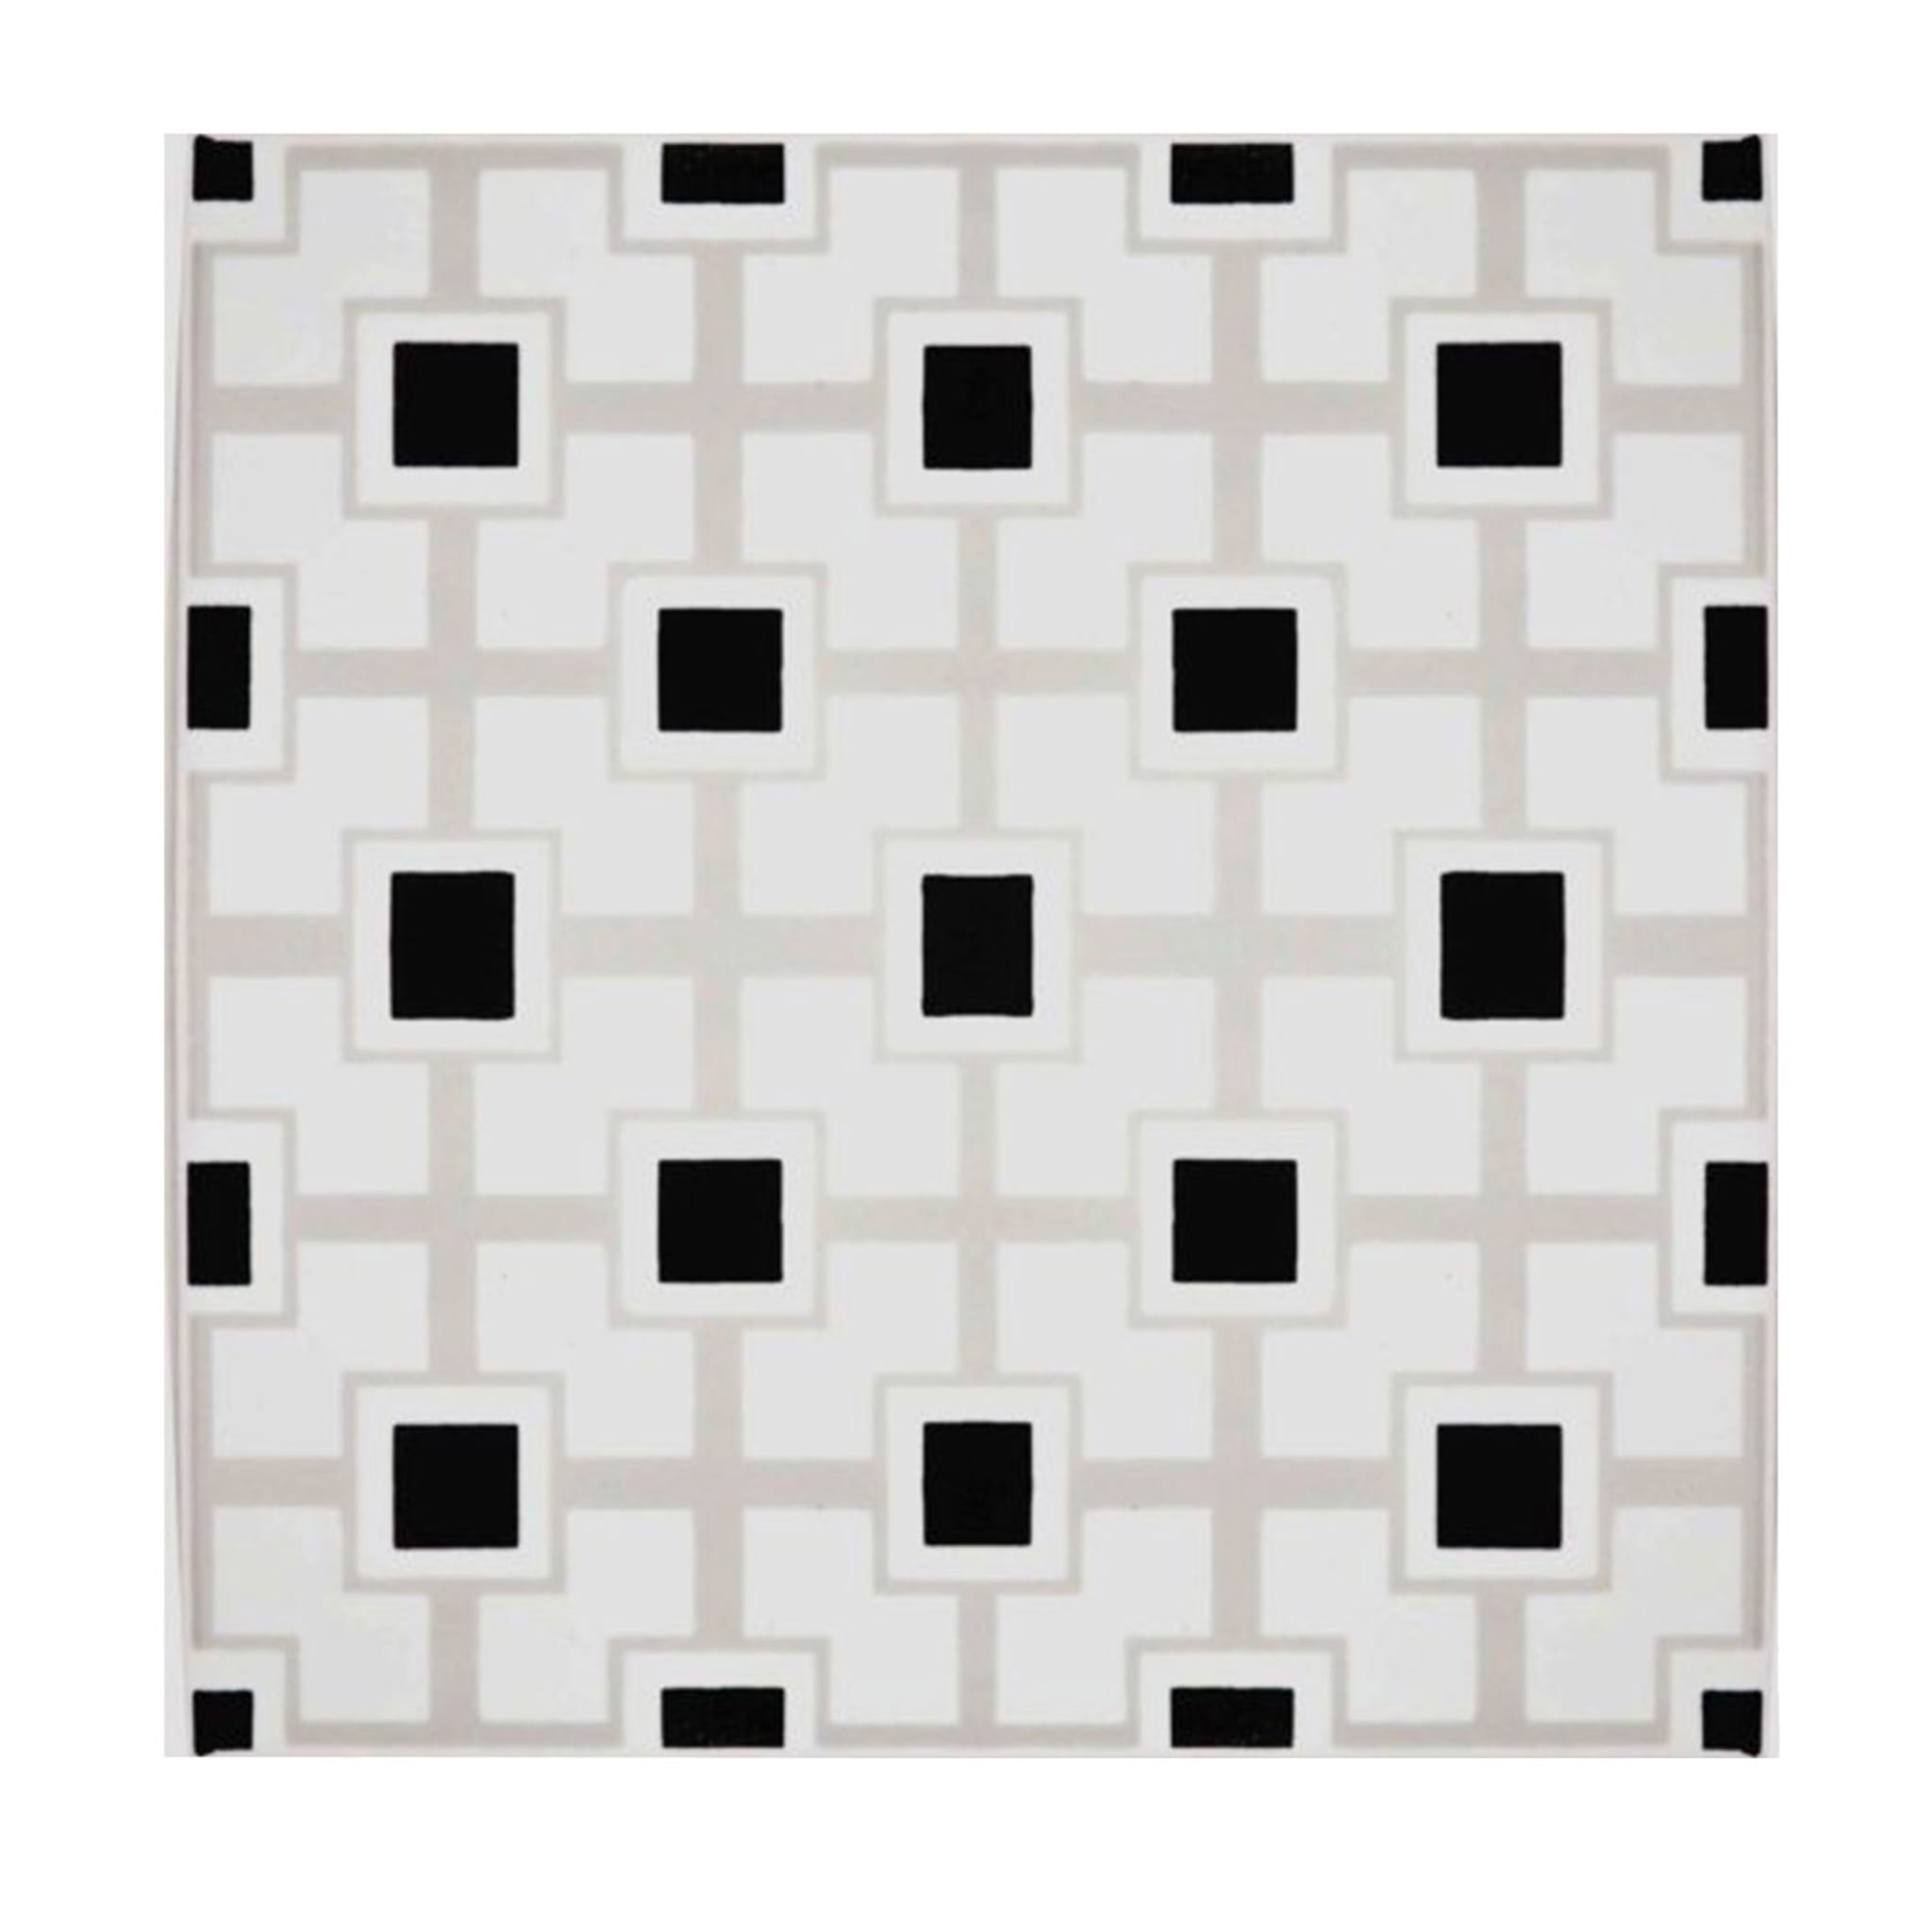 Set of 25 Geometric Trend C44 T10 Tiles - Main view